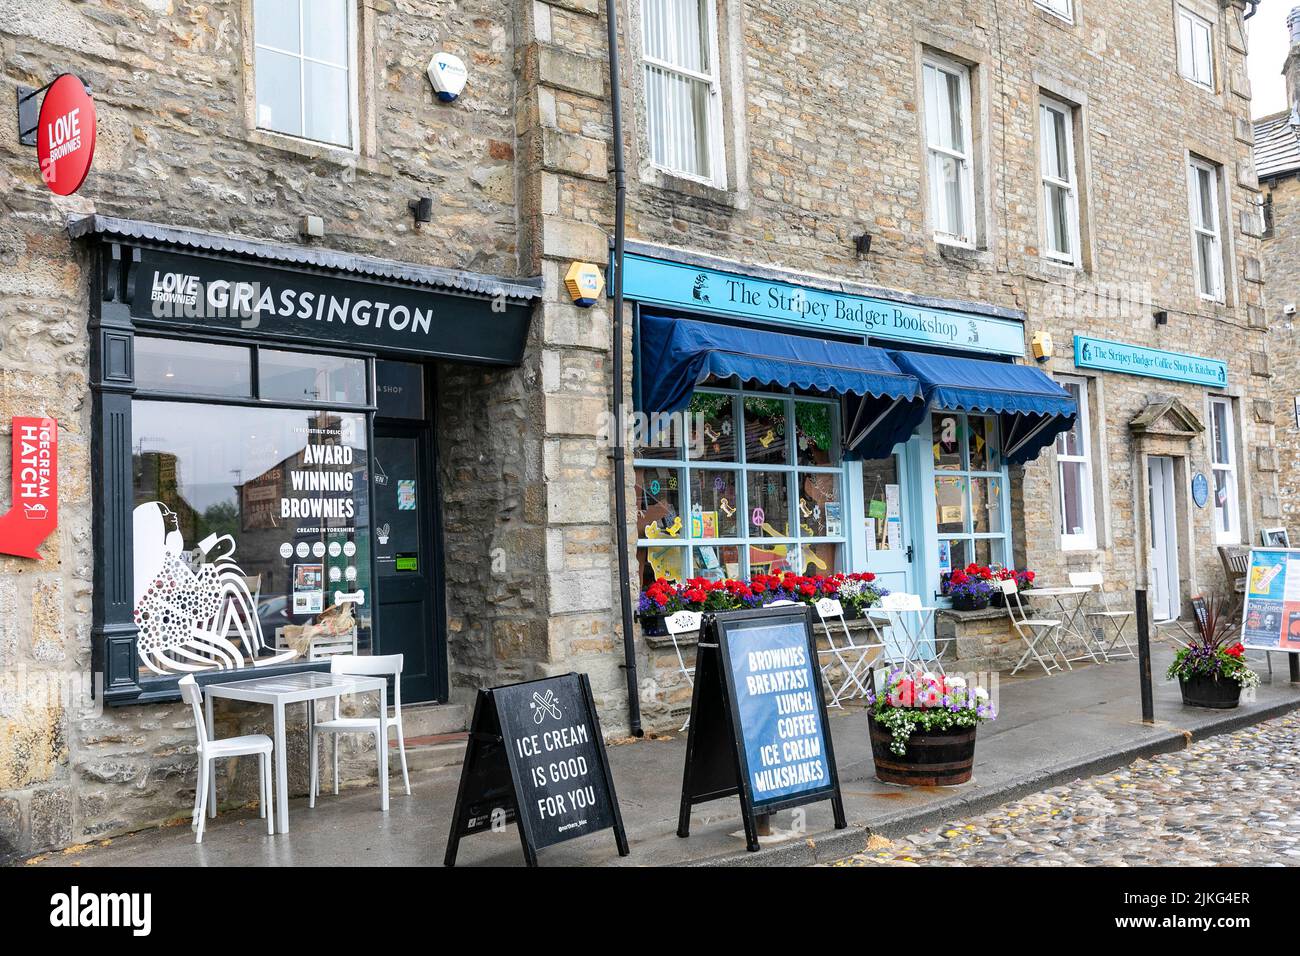 Yorkshire village of Grassington, local village shops including Grassington brownies and Stripes bagel bookshop, Yorkshire Dales,England,Uk Stock Photo